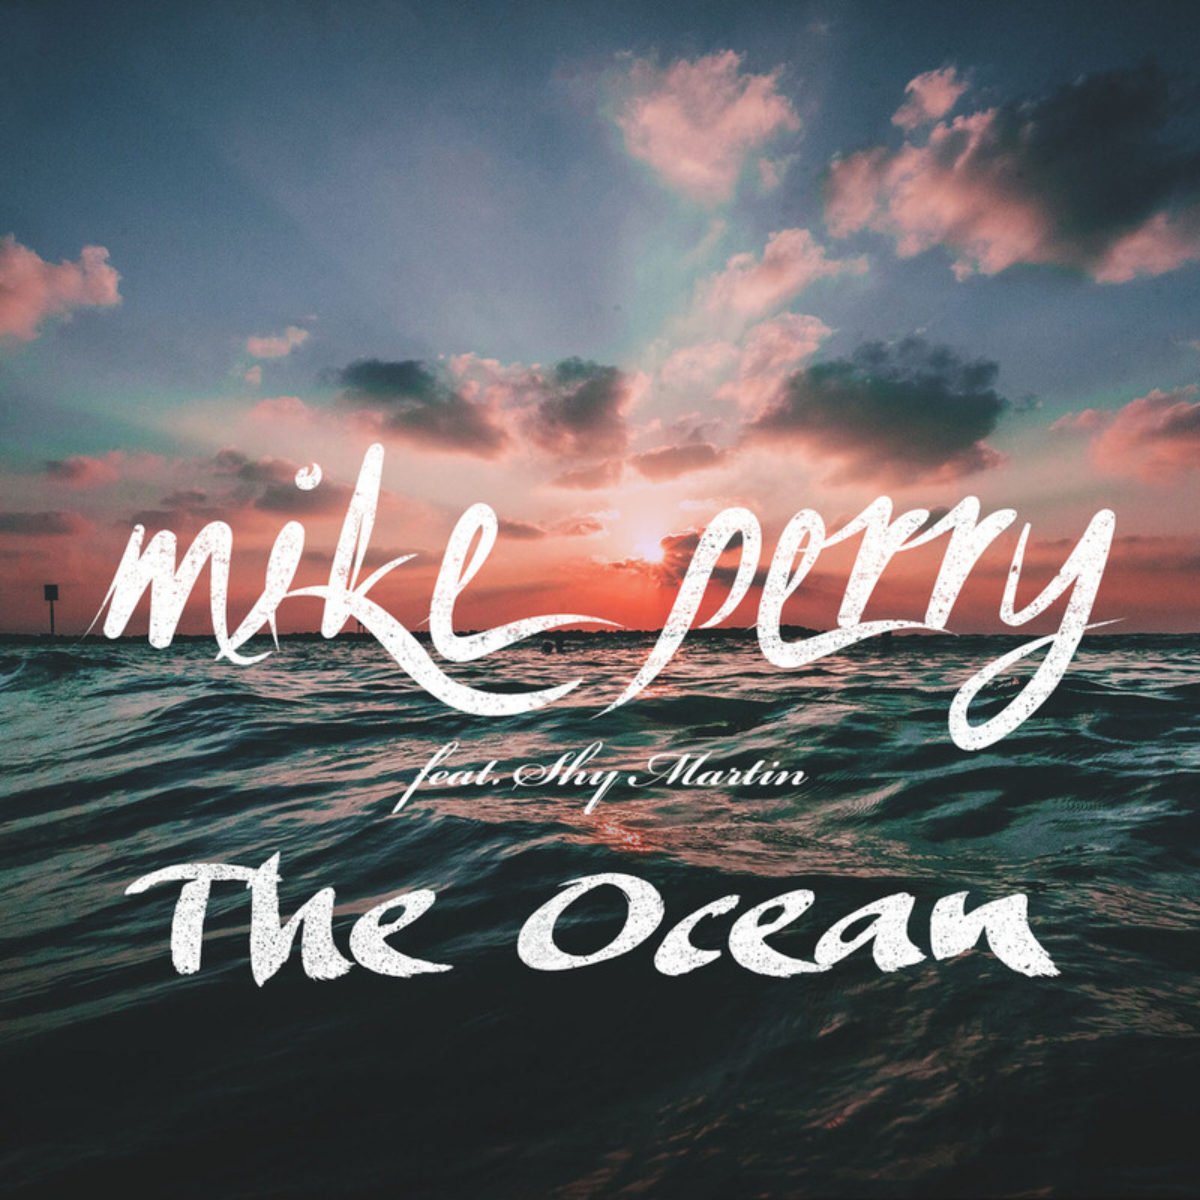 Mike Perry The Ocean 歌詞 日本語 和訳 マイク ペリー シャイマーティン Shy Martin ふむふむハミング